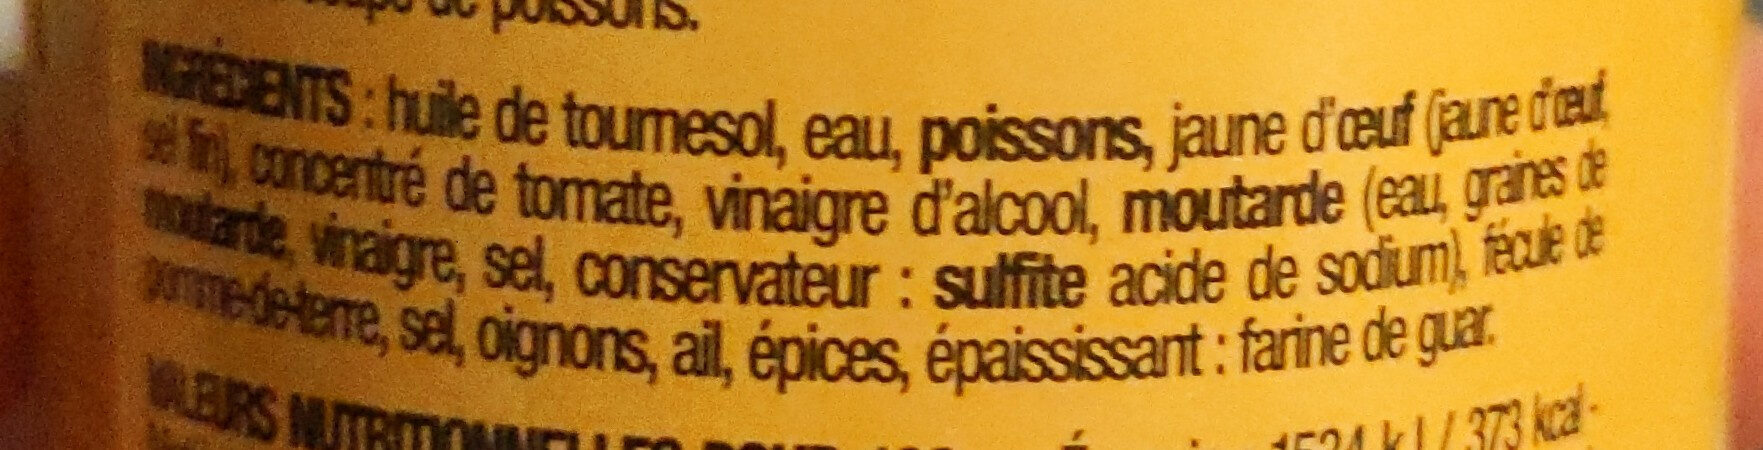 sauce rouille - Ingredients - fr